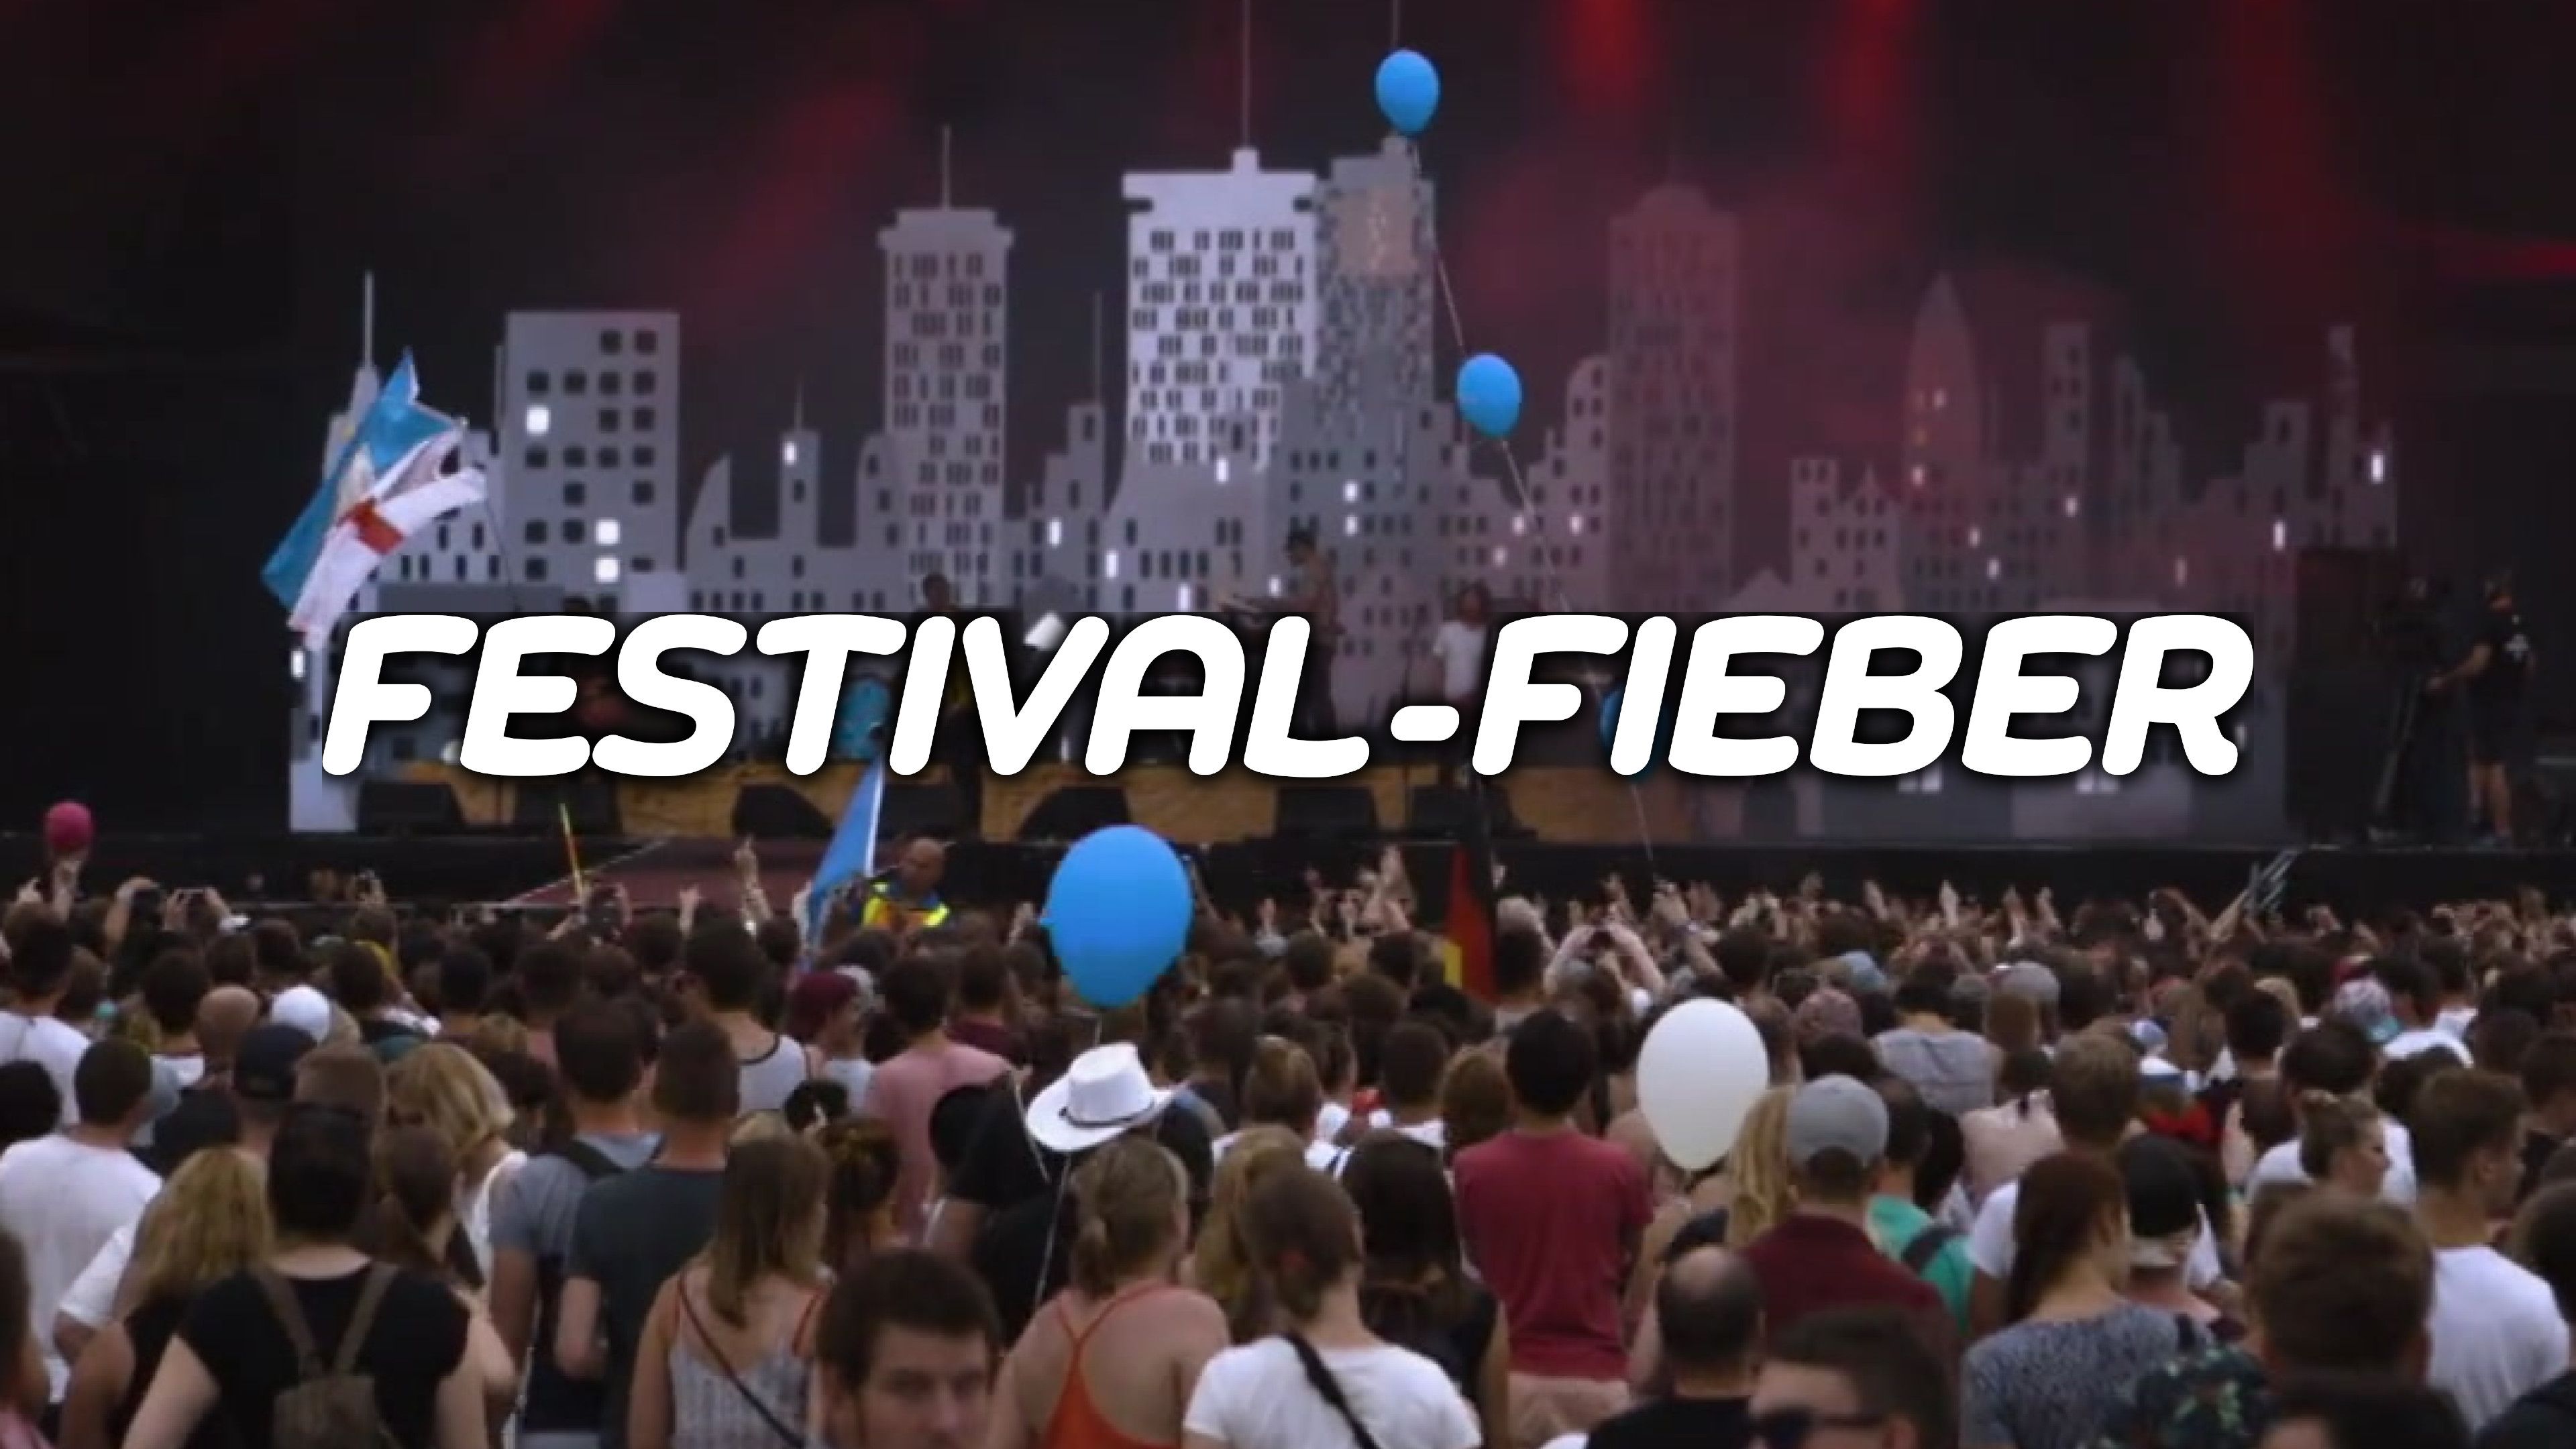 Festival-Fieber